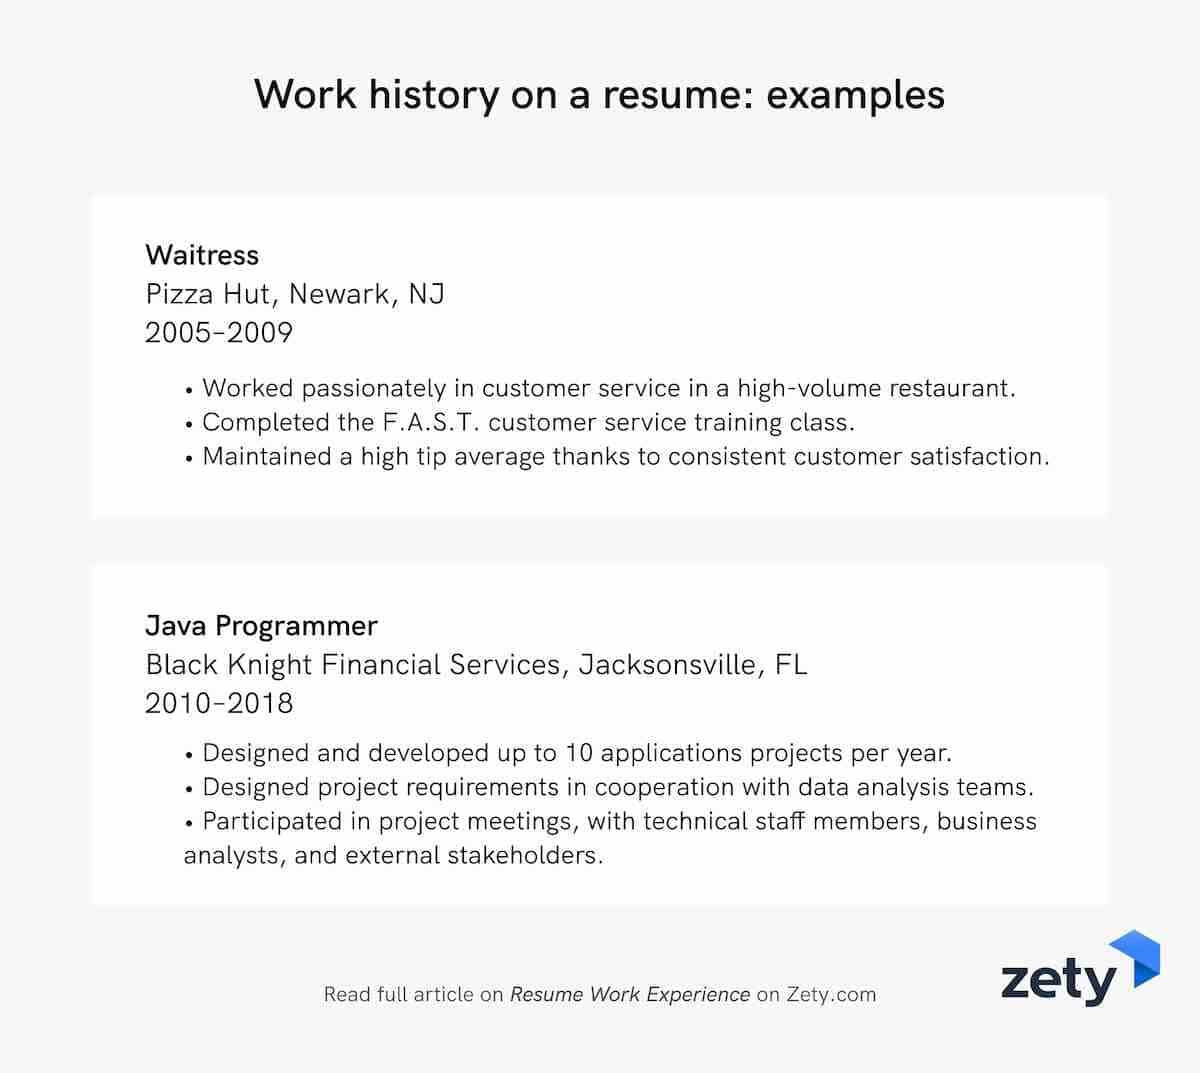 Work Experience on ResumeâHistory &  Job Description Examples